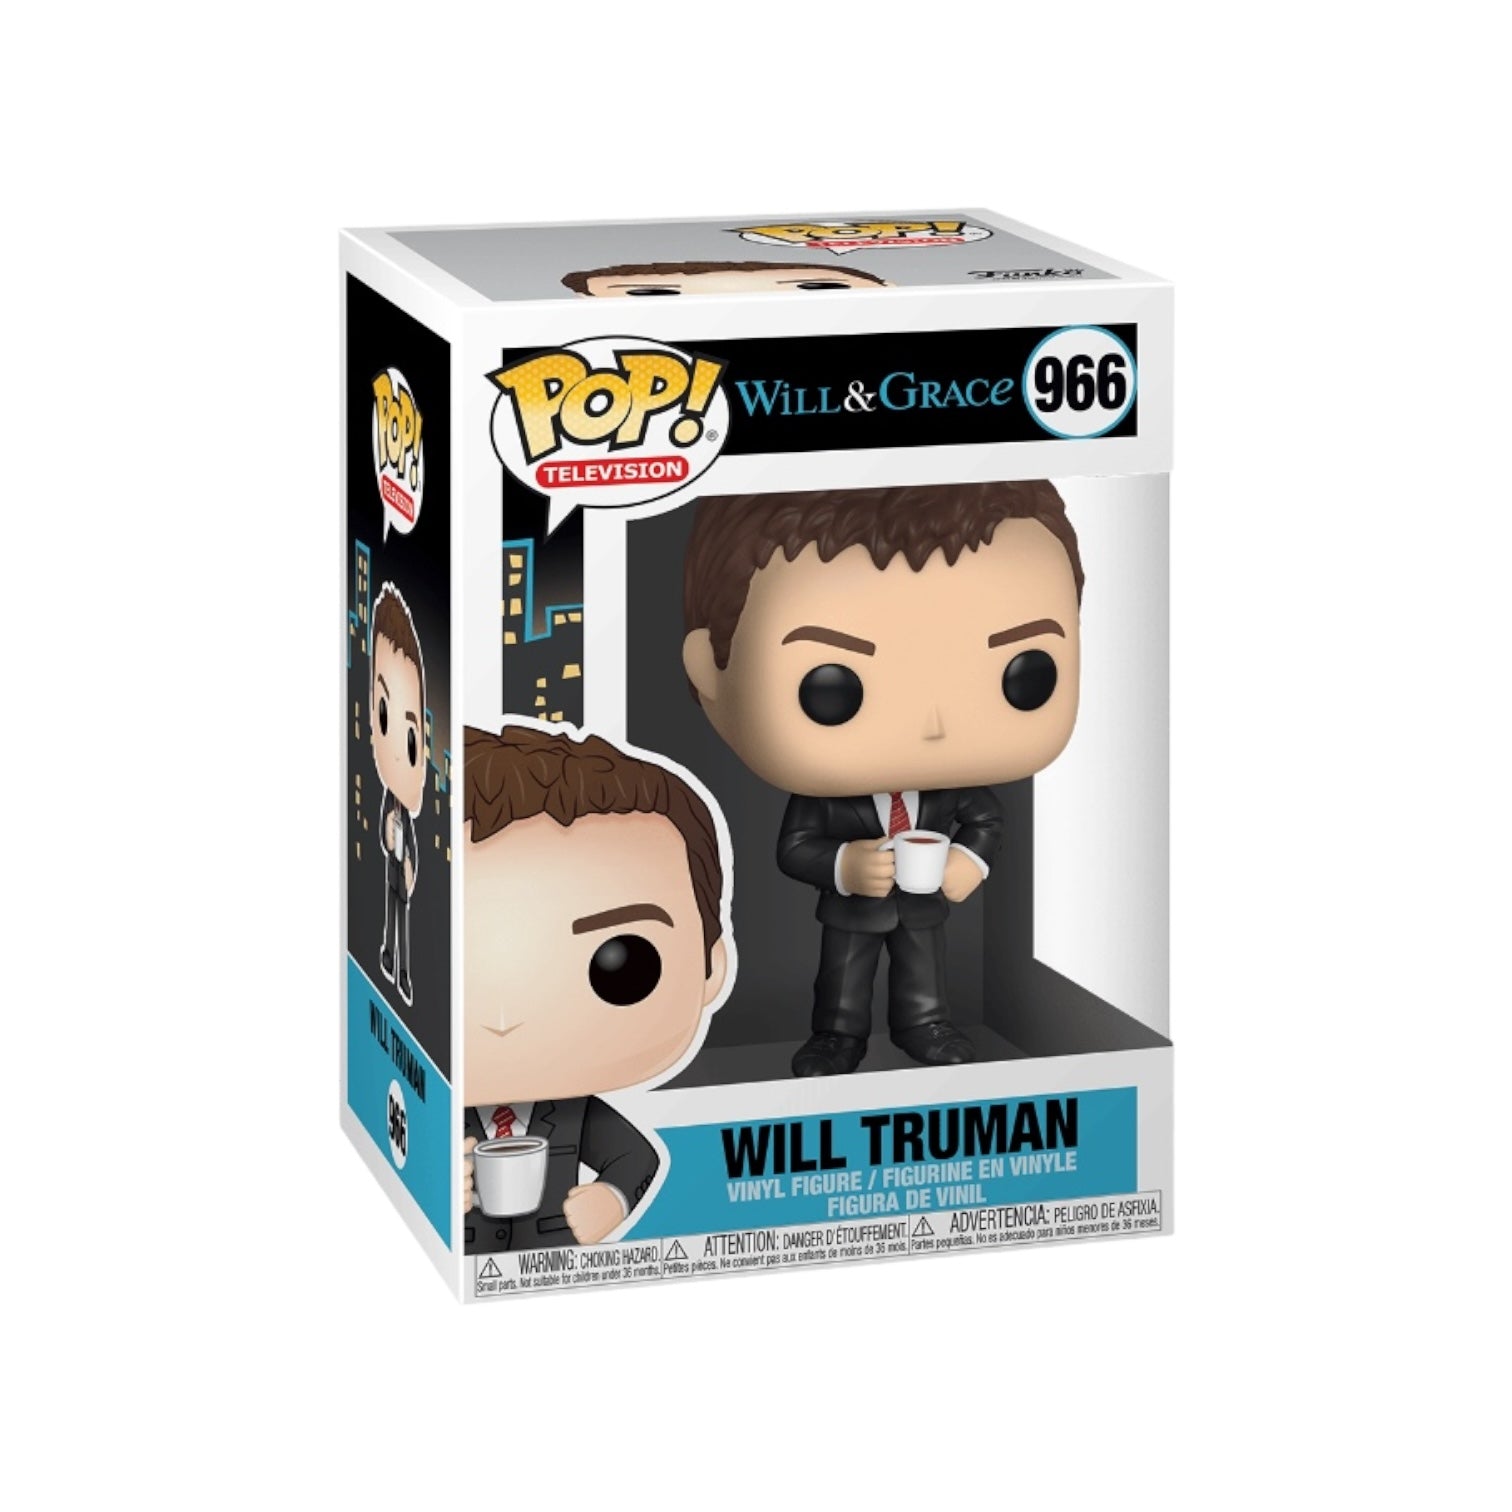 Will Truman #966 Funko Pop! - Will & Grace